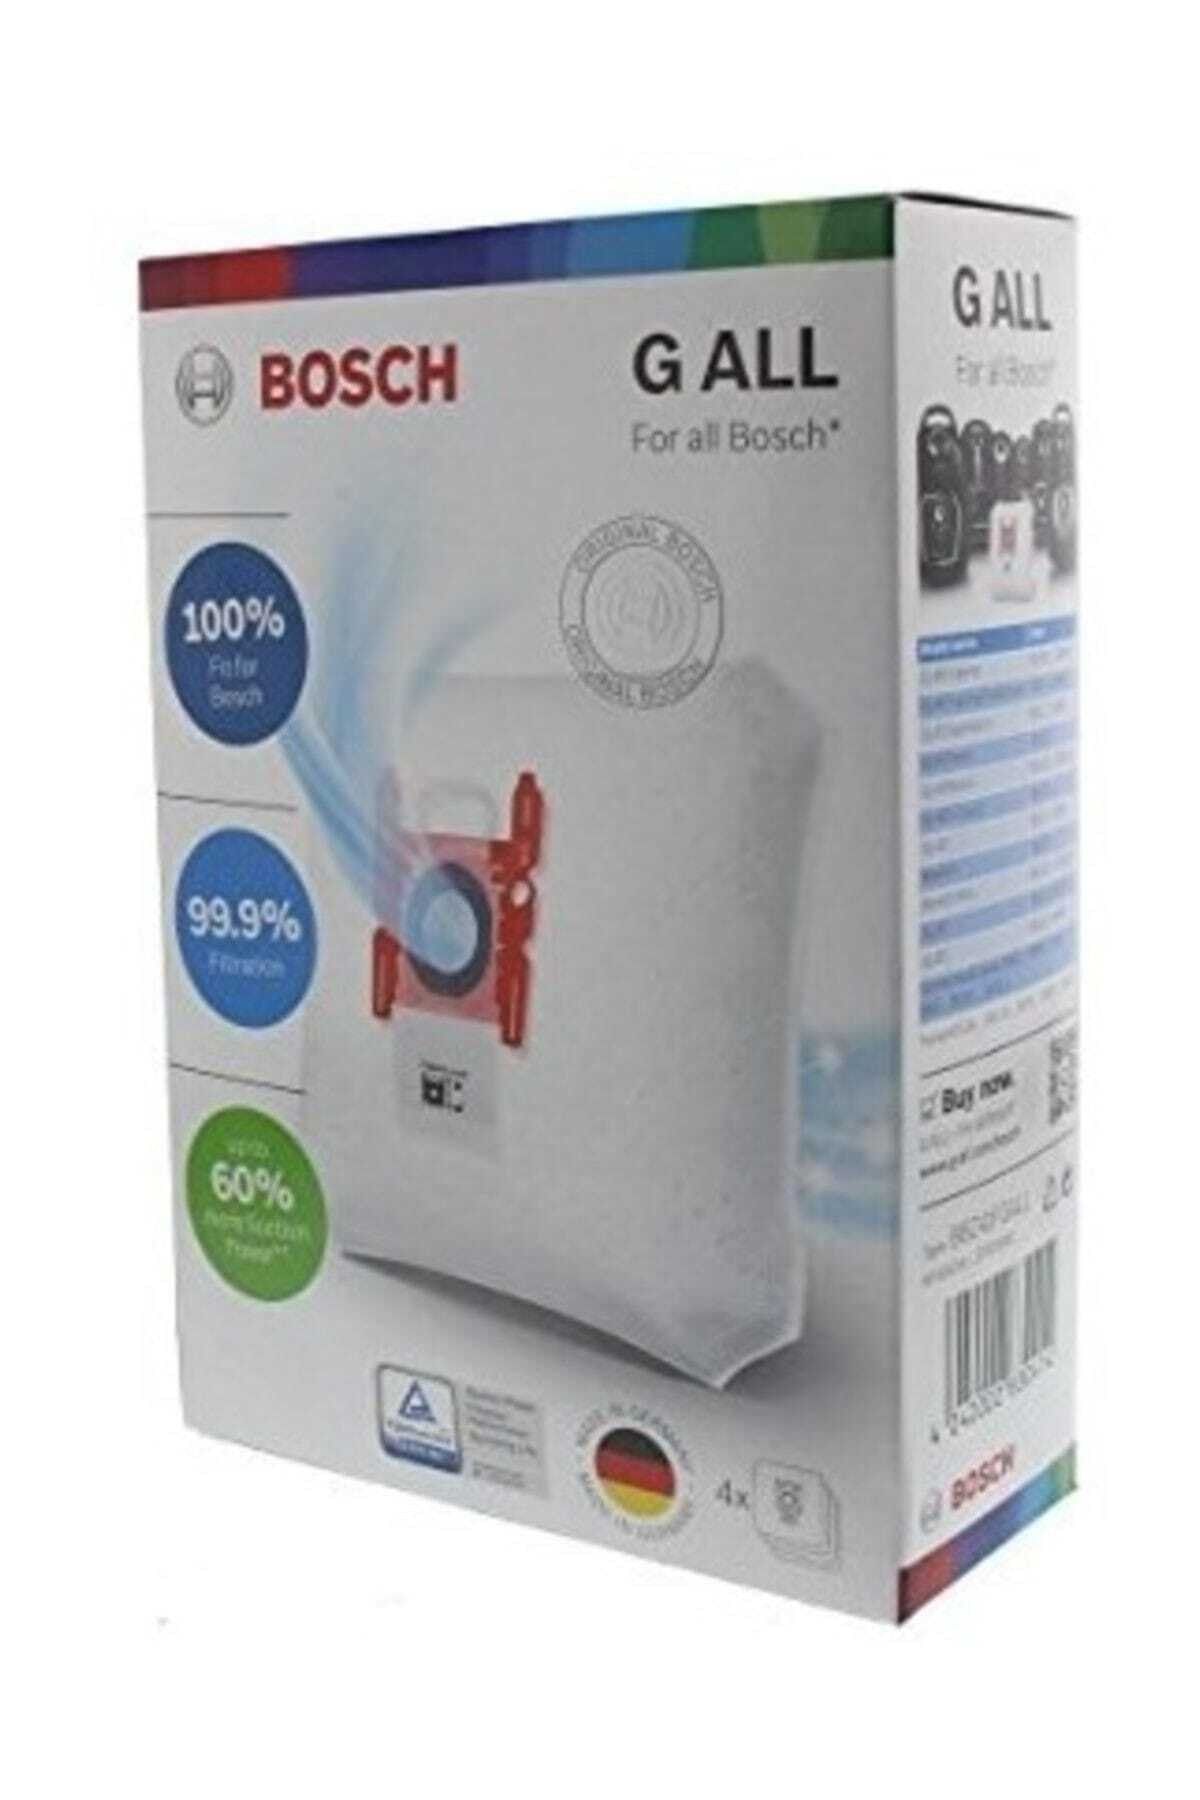 Bosch Type G ALL BBZ41FGALL 4 Adet Toz Torbası